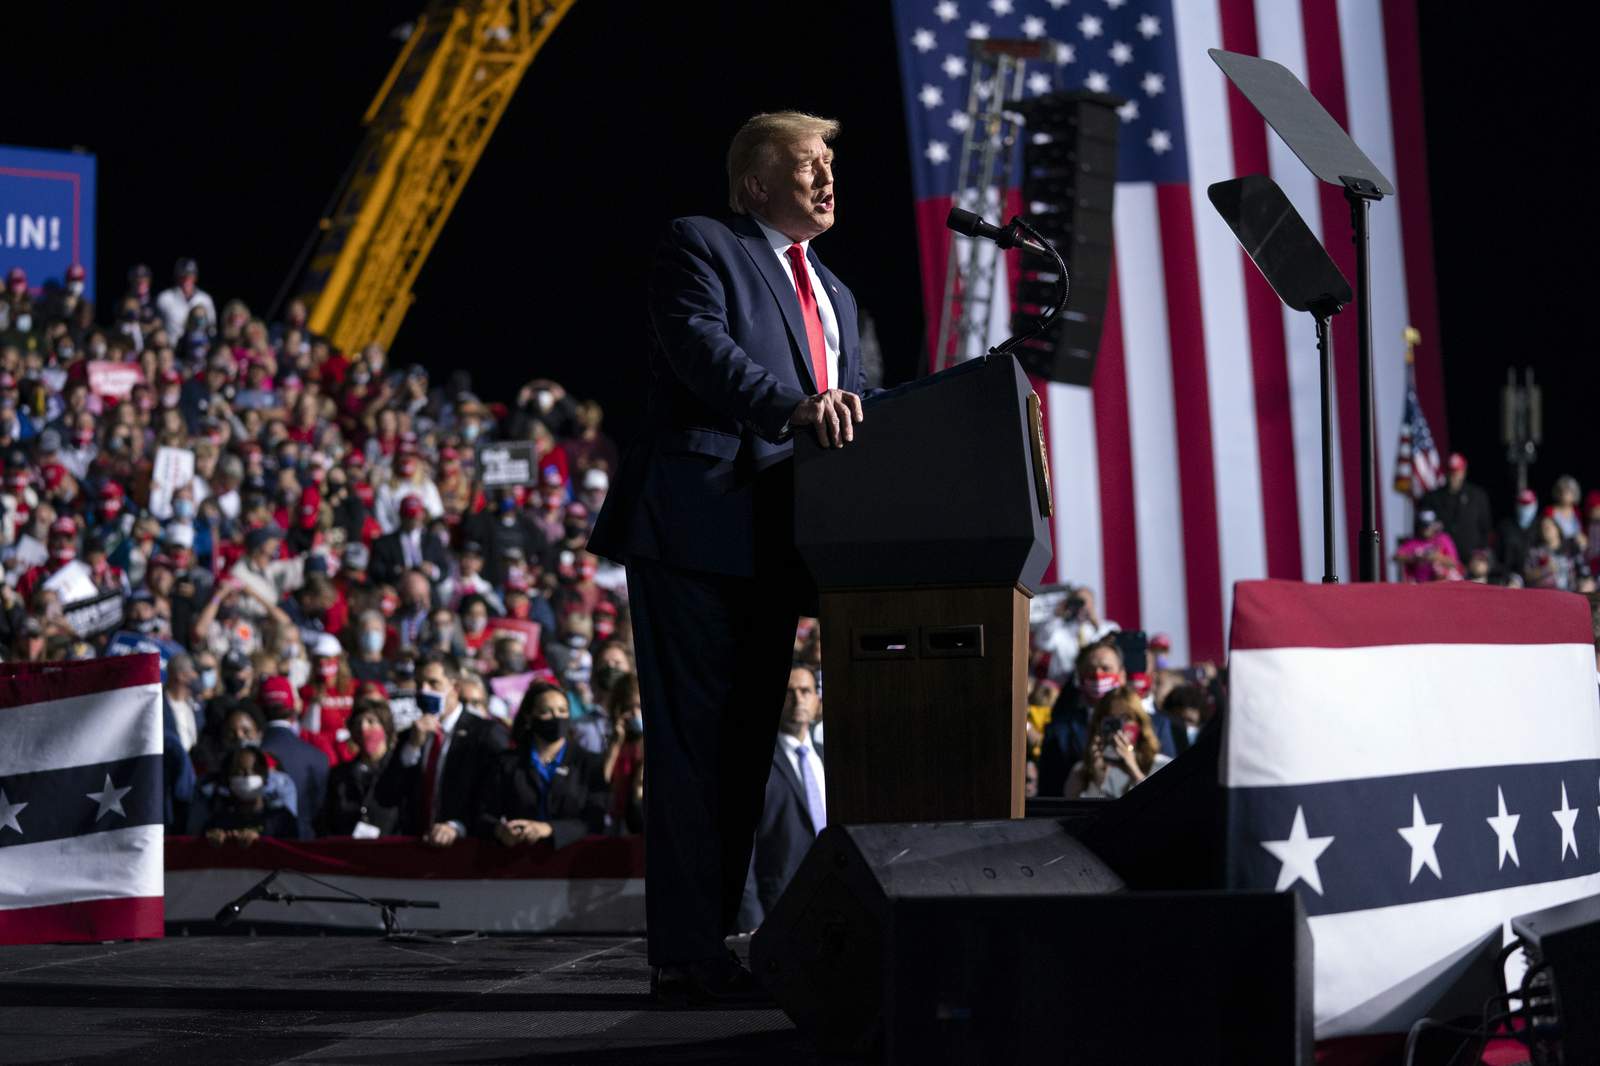 WATCH: President Trump ‘Make America Great Again’ rally in Newport News, Virginia